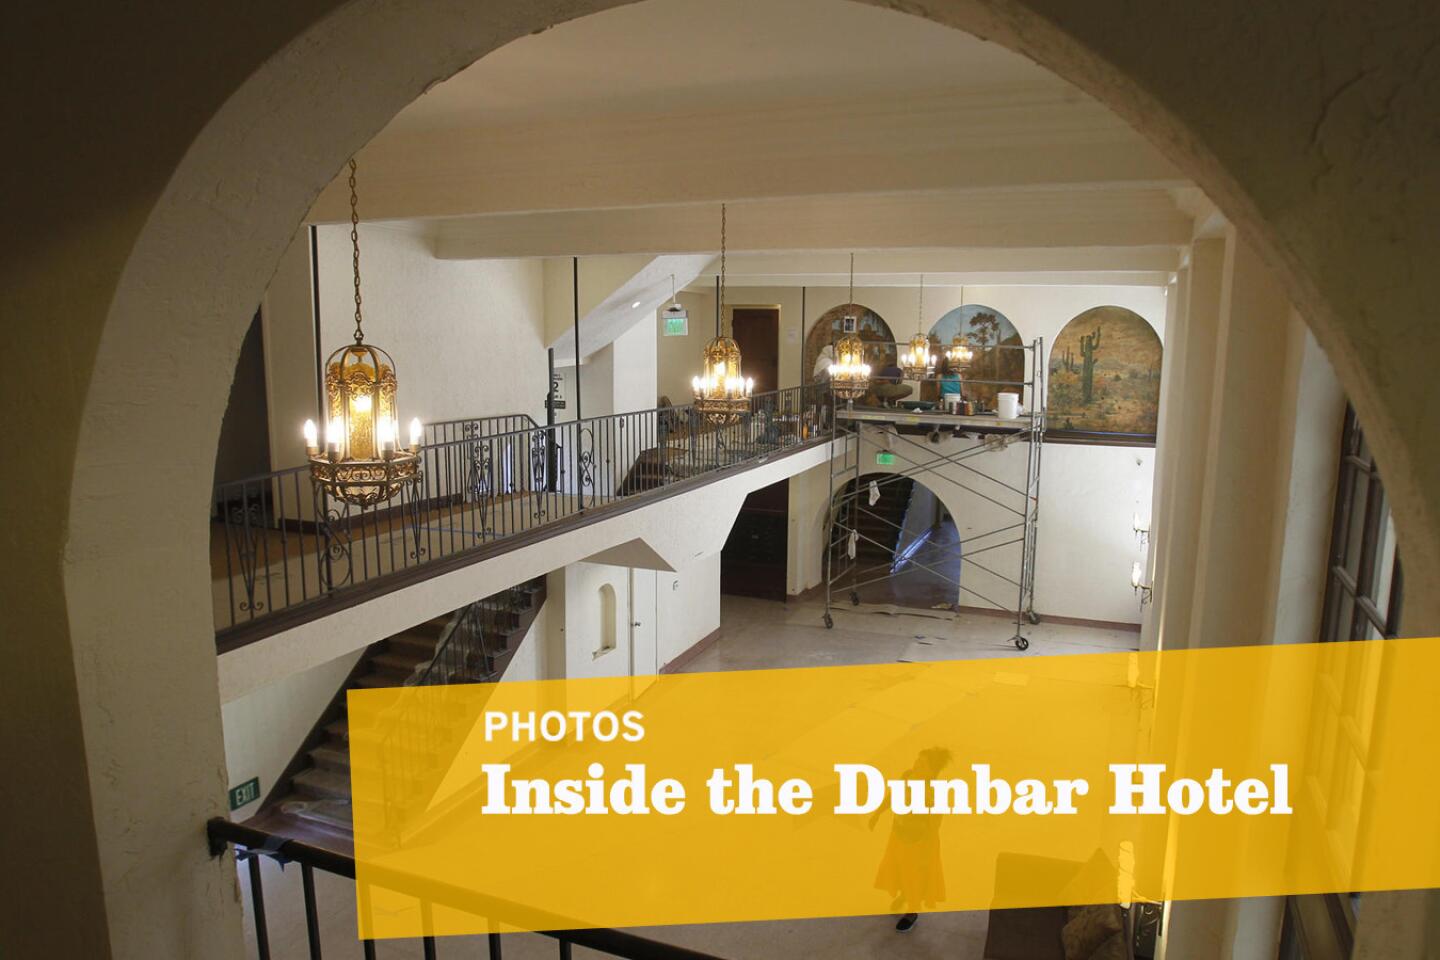 The Dunbar Hotel's $30-million makeover